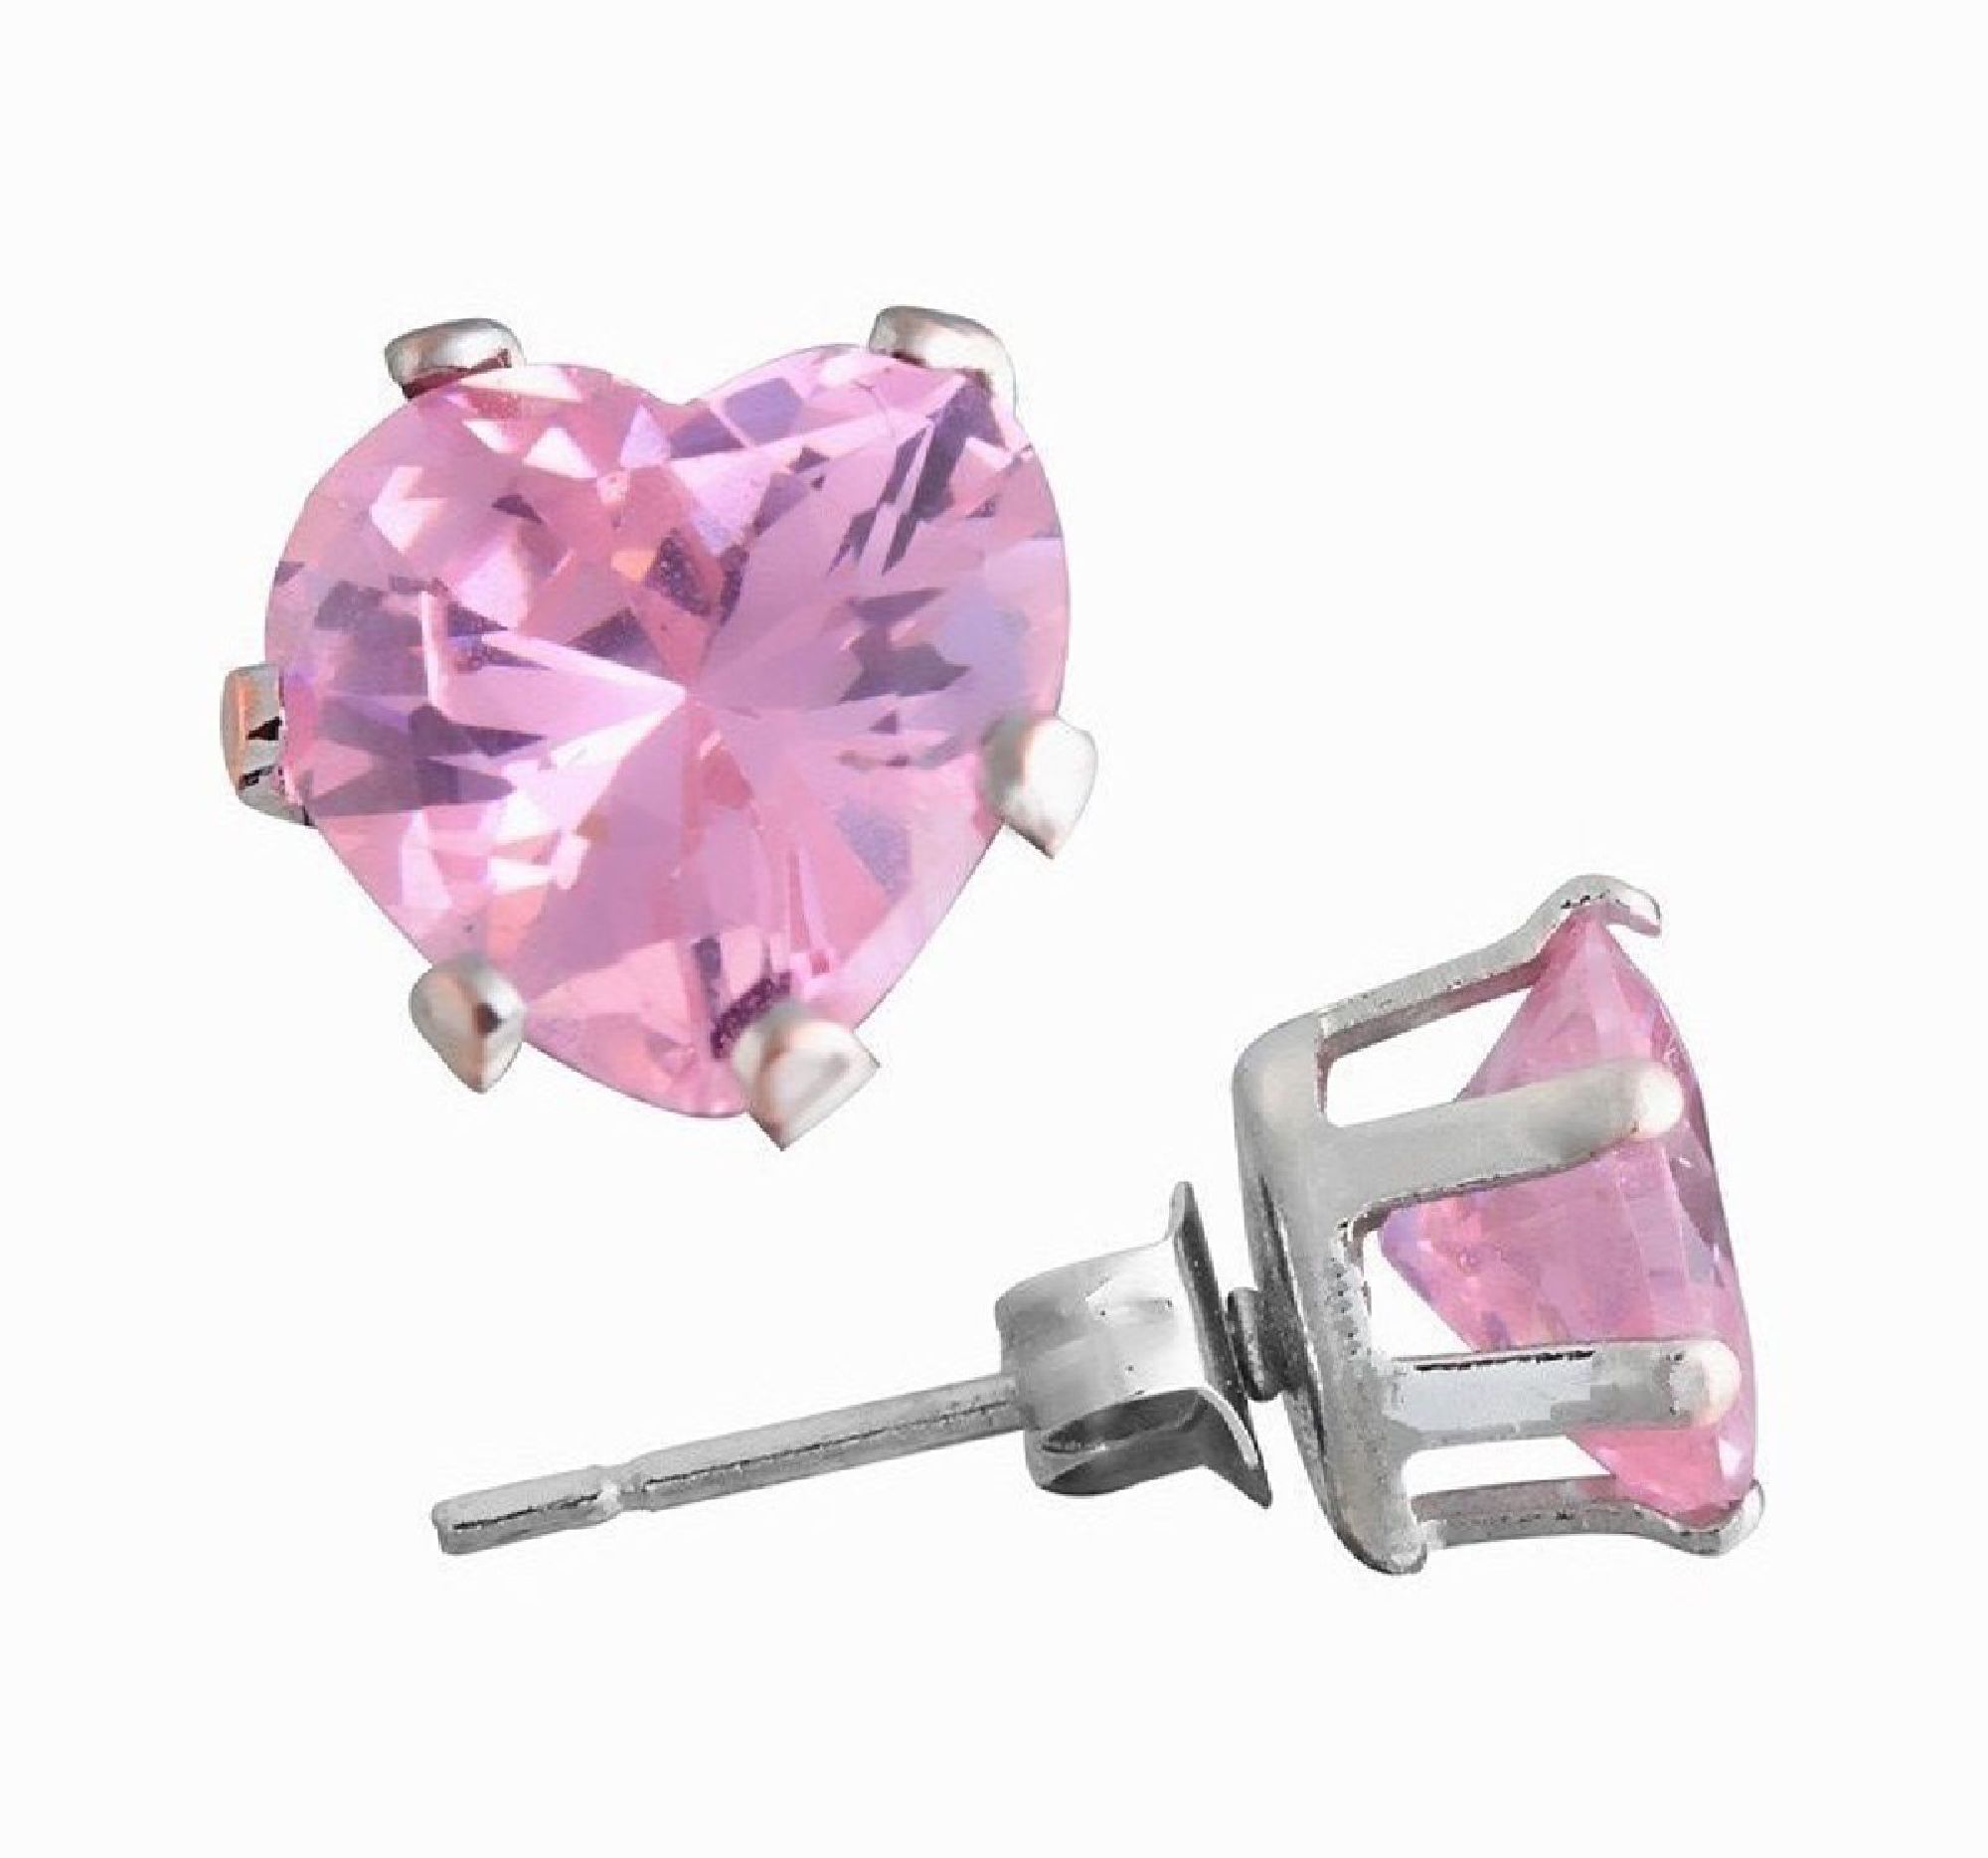 3 Carat Heart Shape Pink Diamond manmade Stud Earrings for Men in 14k White Gold over Sterling Silver Designed in France